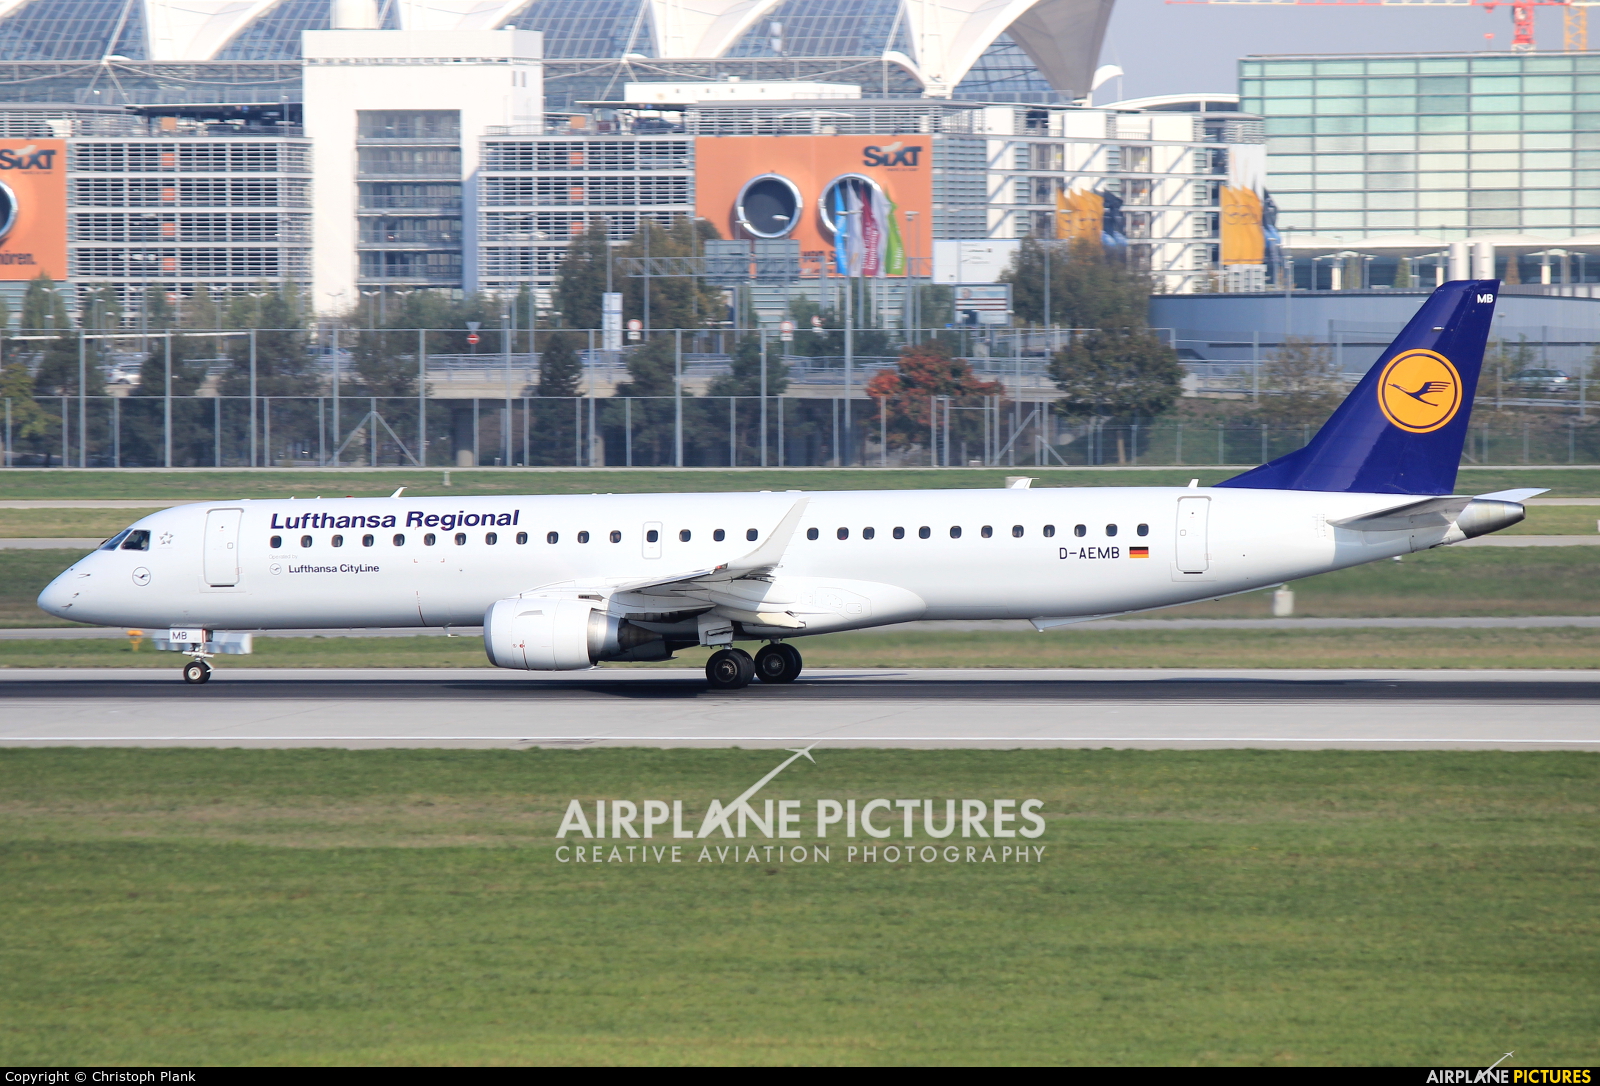 Lufthansa Regional - CityLine D-AEMB aircraft at Munich